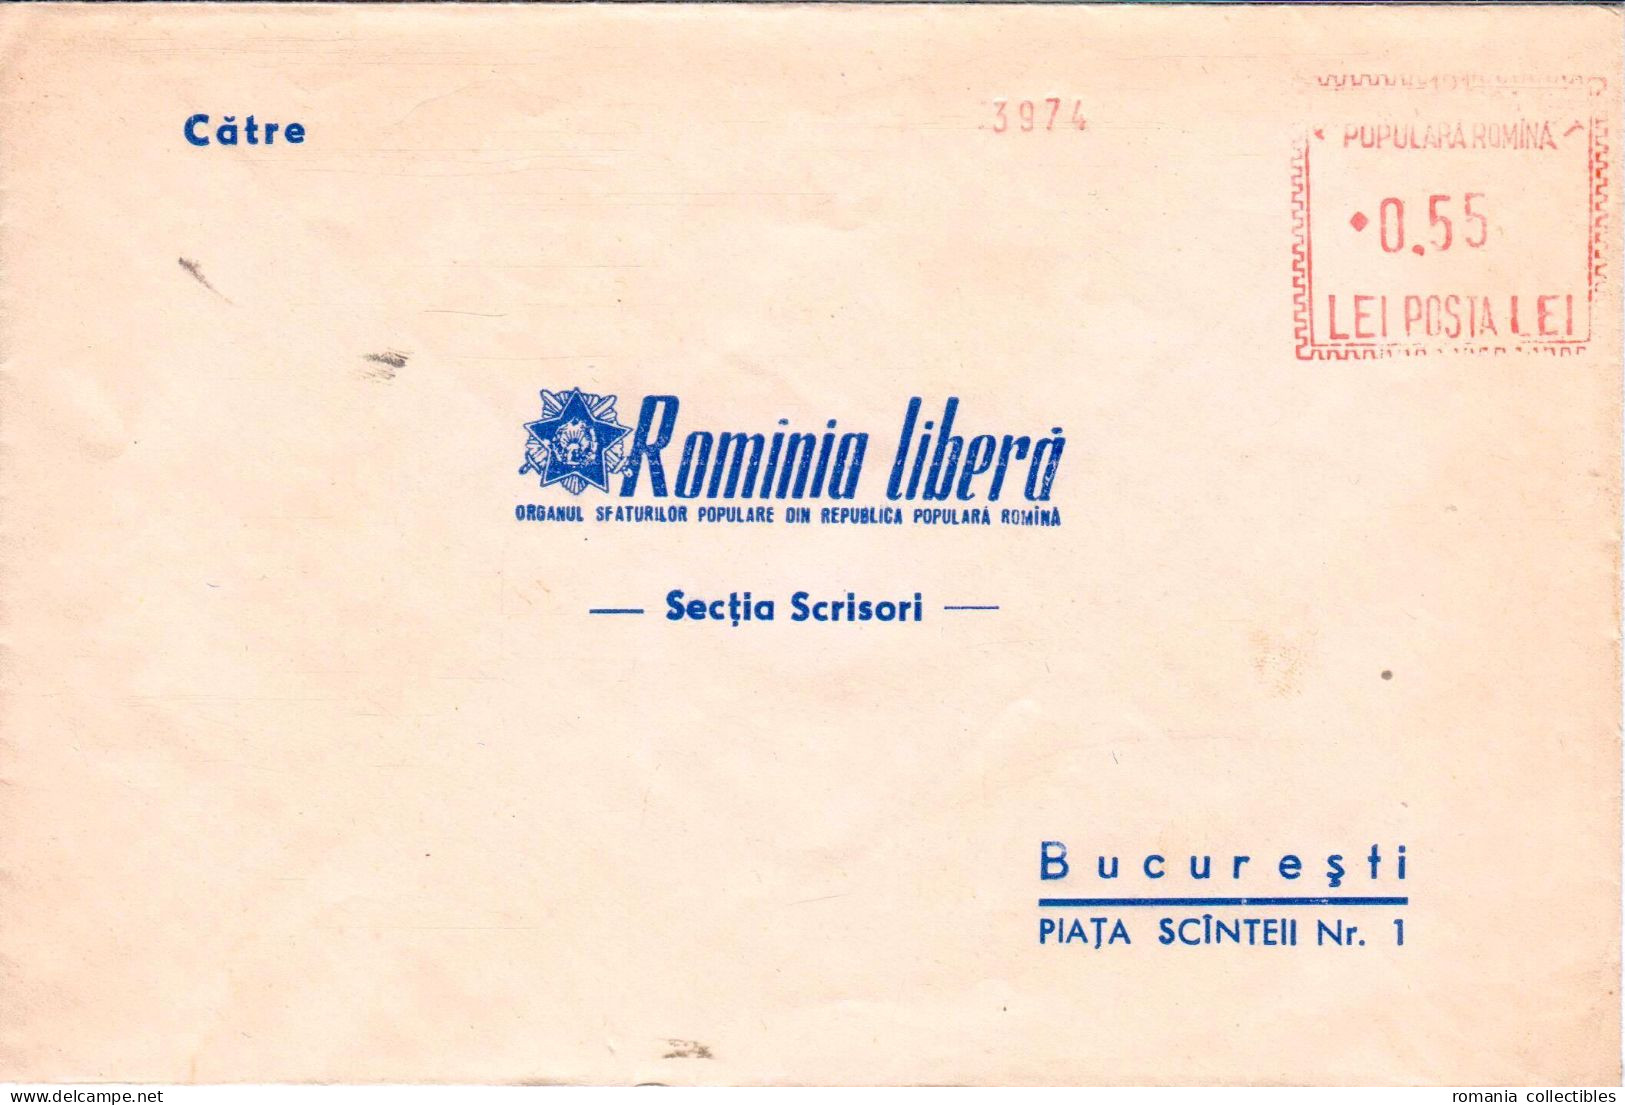 Romania, 1980's, Vintage Uncirculated Postal Cover  - "Romania Libera" Newspaper Advertising - Service